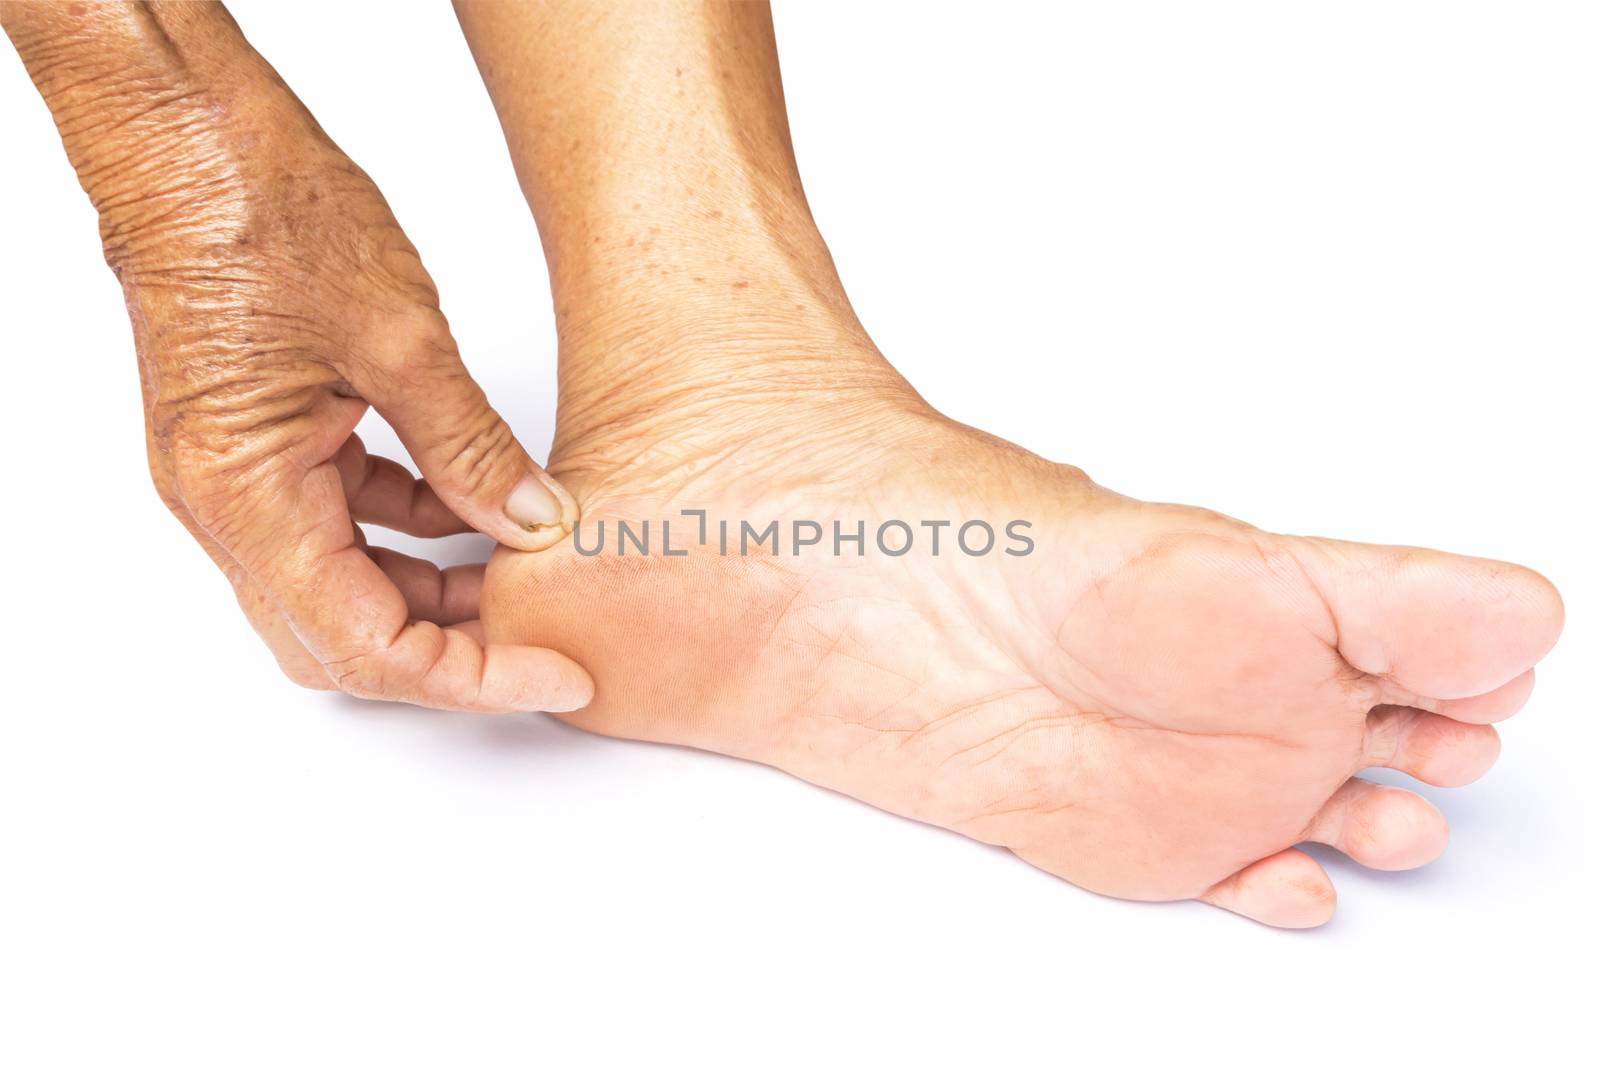 Hand holding feet old women, take care feeling with white backgr by pt.pongsak@gmail.com